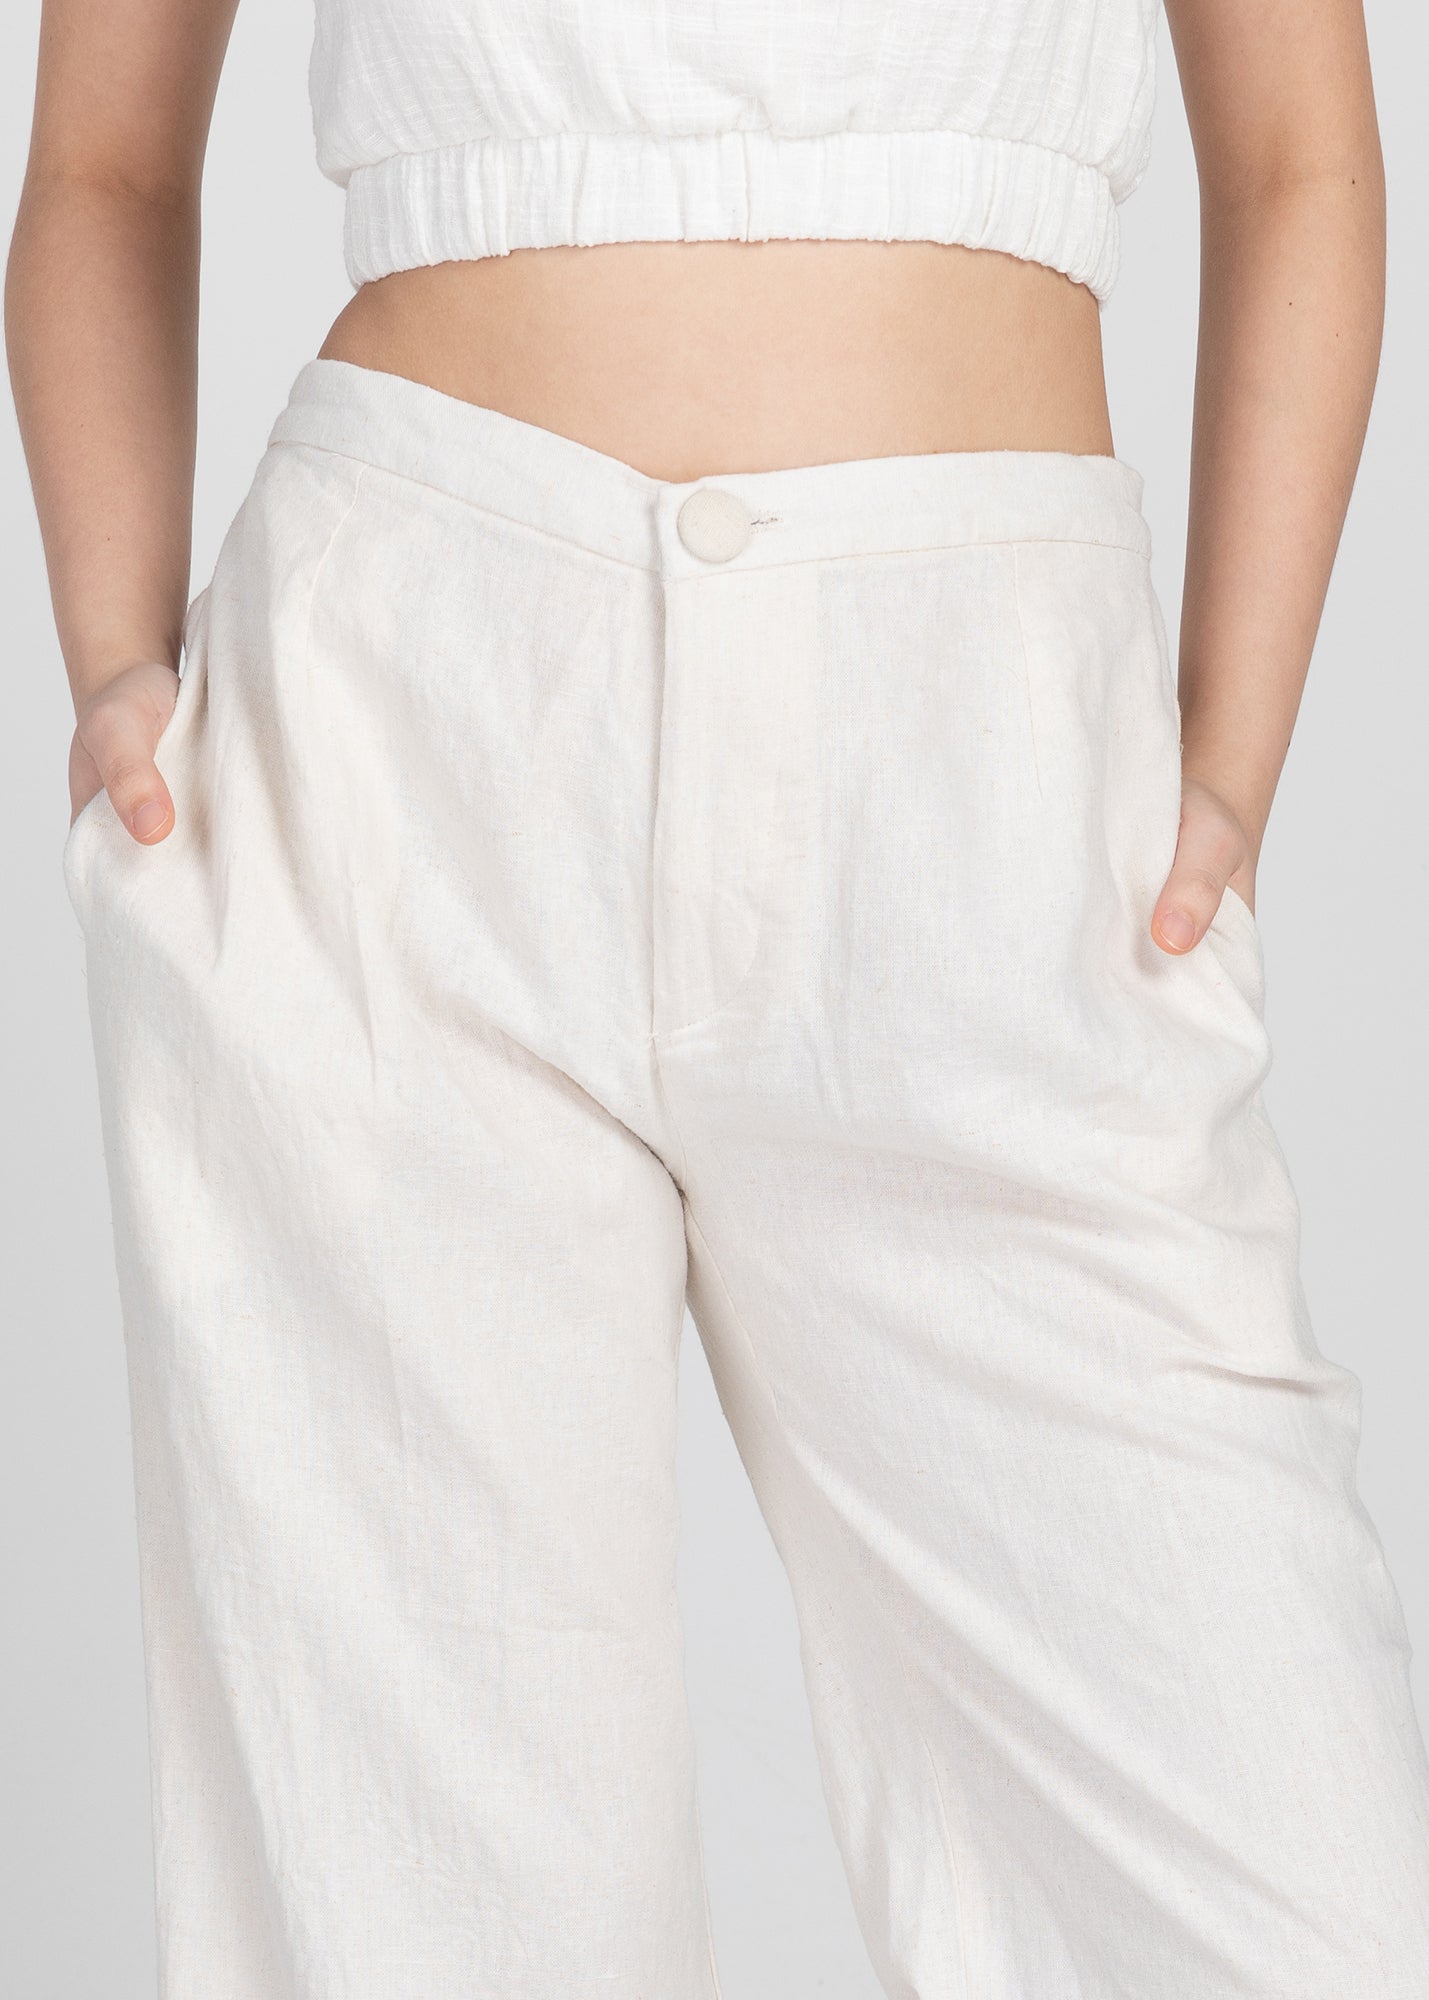 Classic Linen Pants (Off-White)